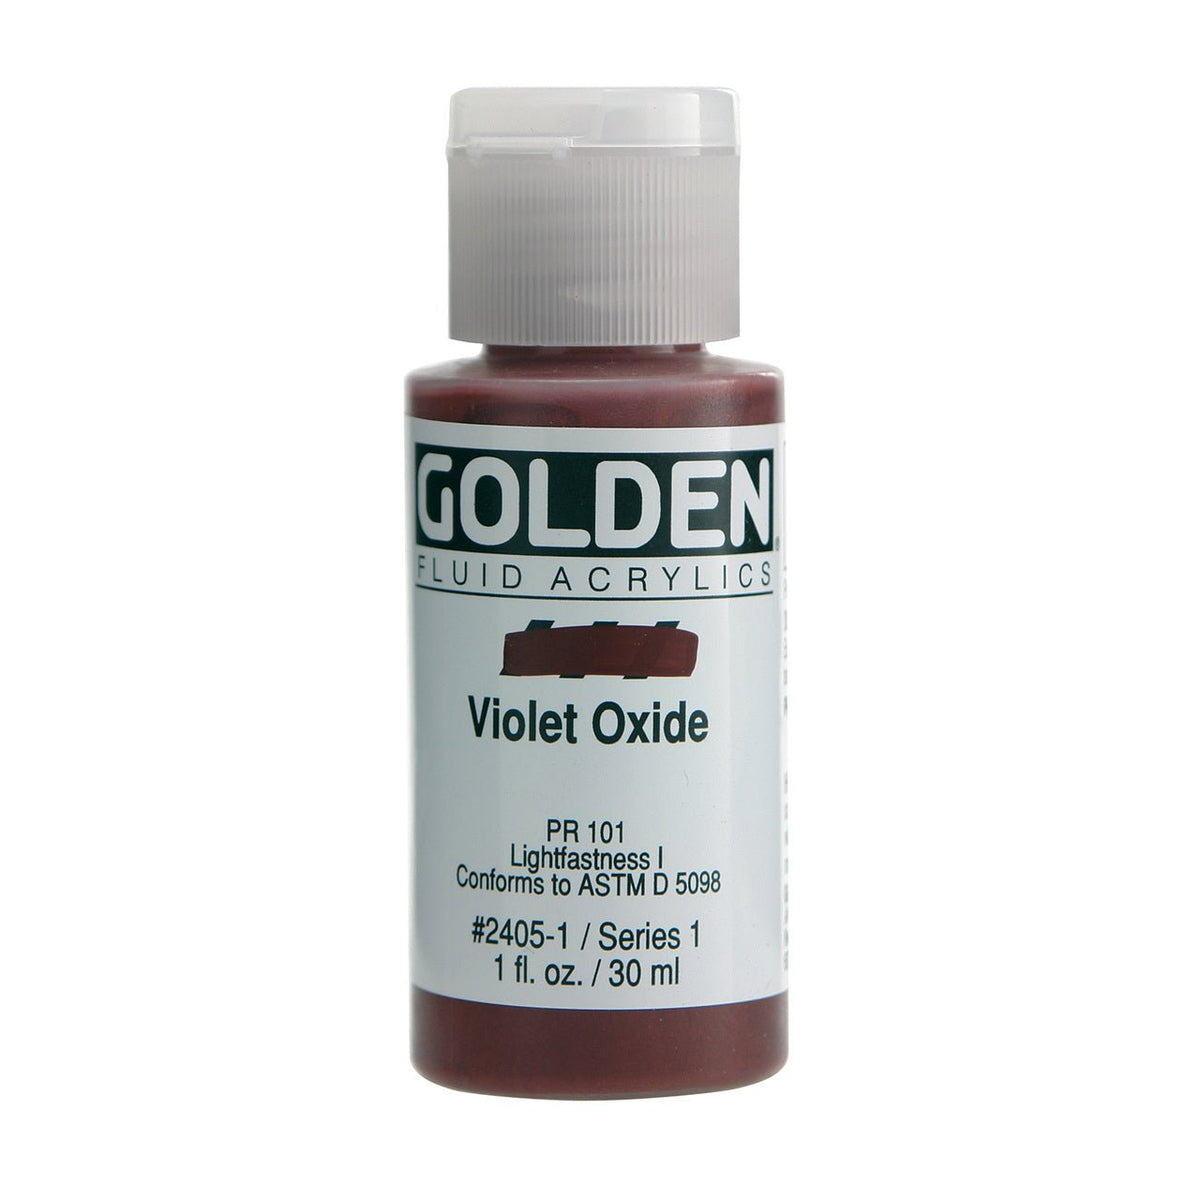 Golden Fluid Acrylic Violet Oxide 1 oz - merriartist.com